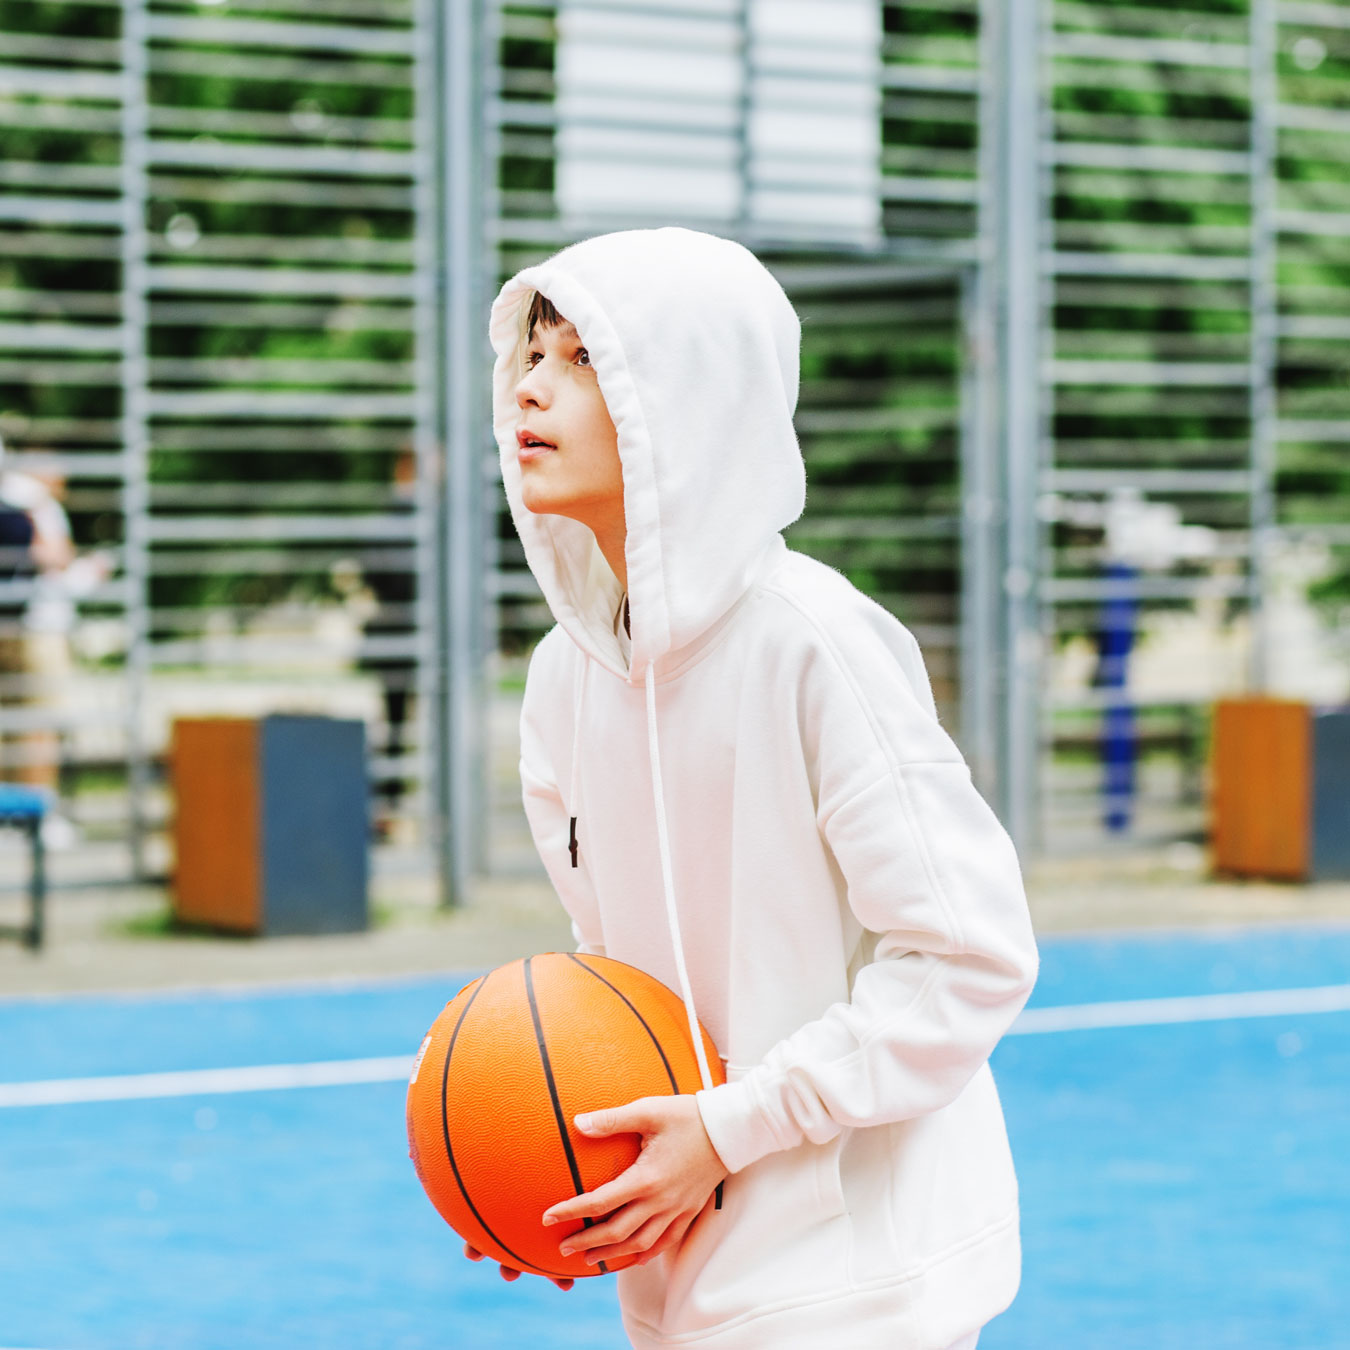 teenage-boy-plays-basketball-on-court-lesson-at-s-2022-06-15-15-13-39-utc